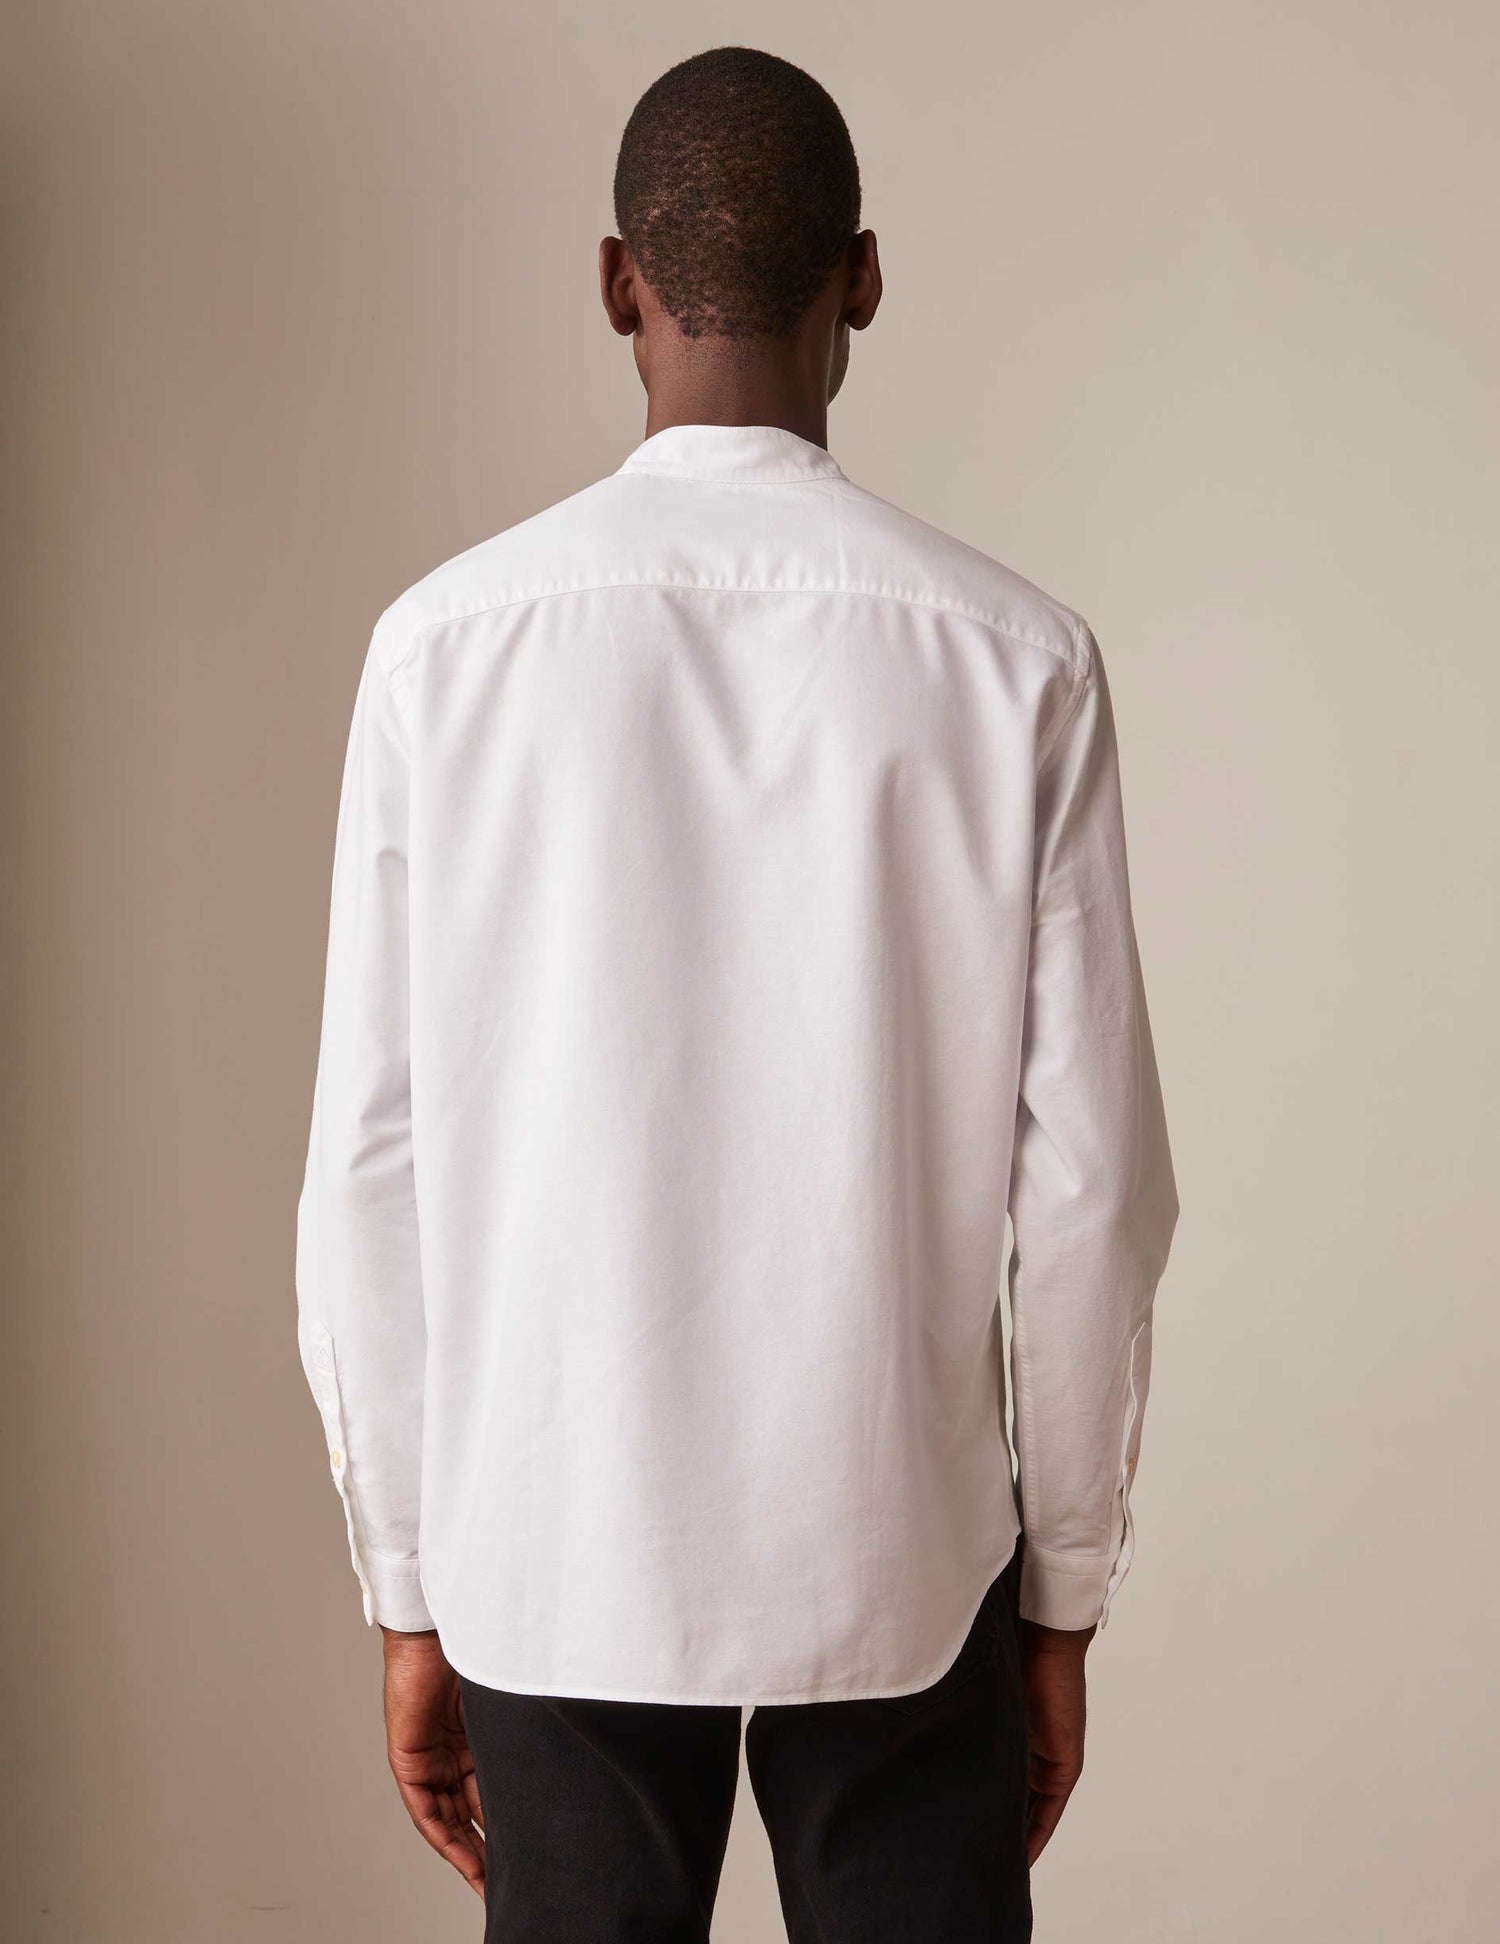 White Carl shirt - Oxford - Open straight Collar#2